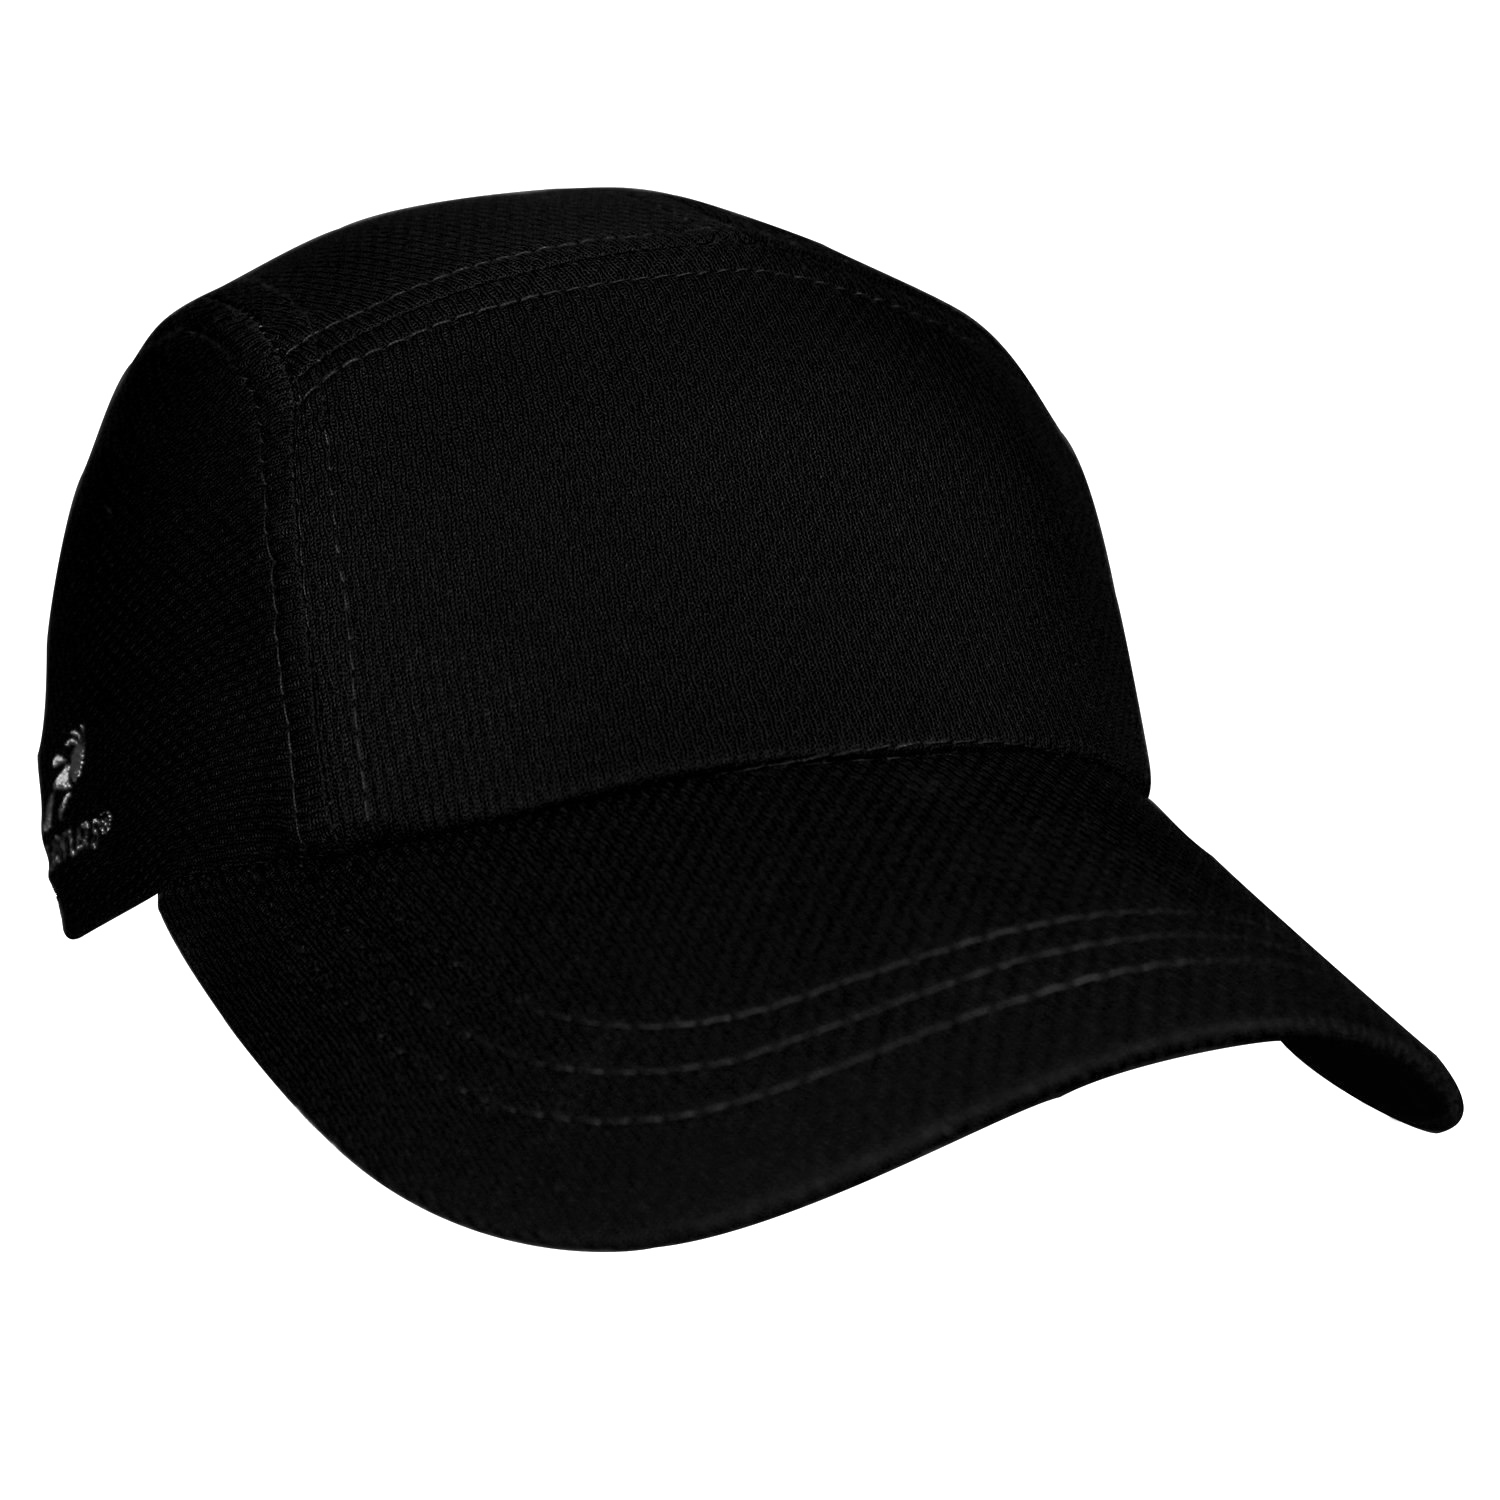 Black Baseball Cap Transparent Image